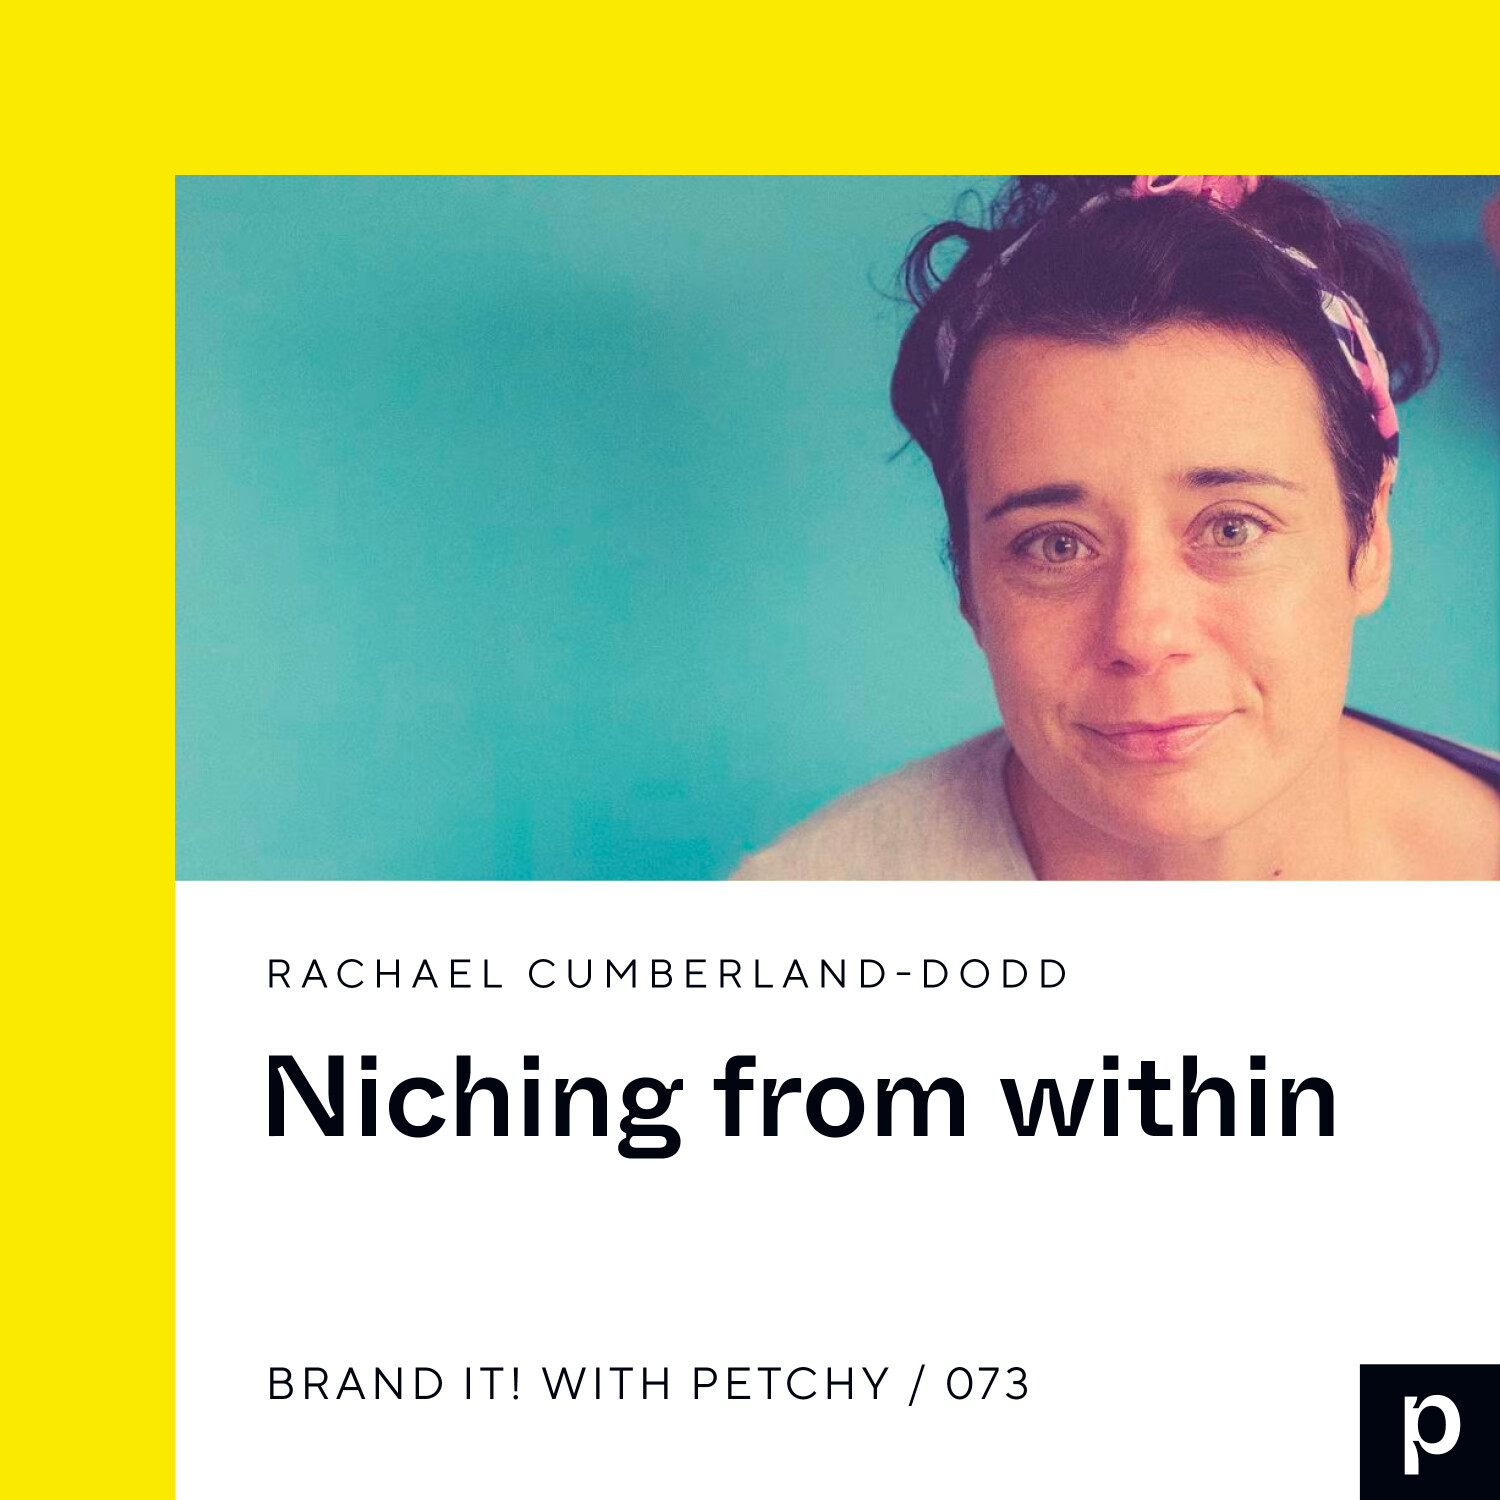 Niching from within w/ Rachael Cumberland-Dodd